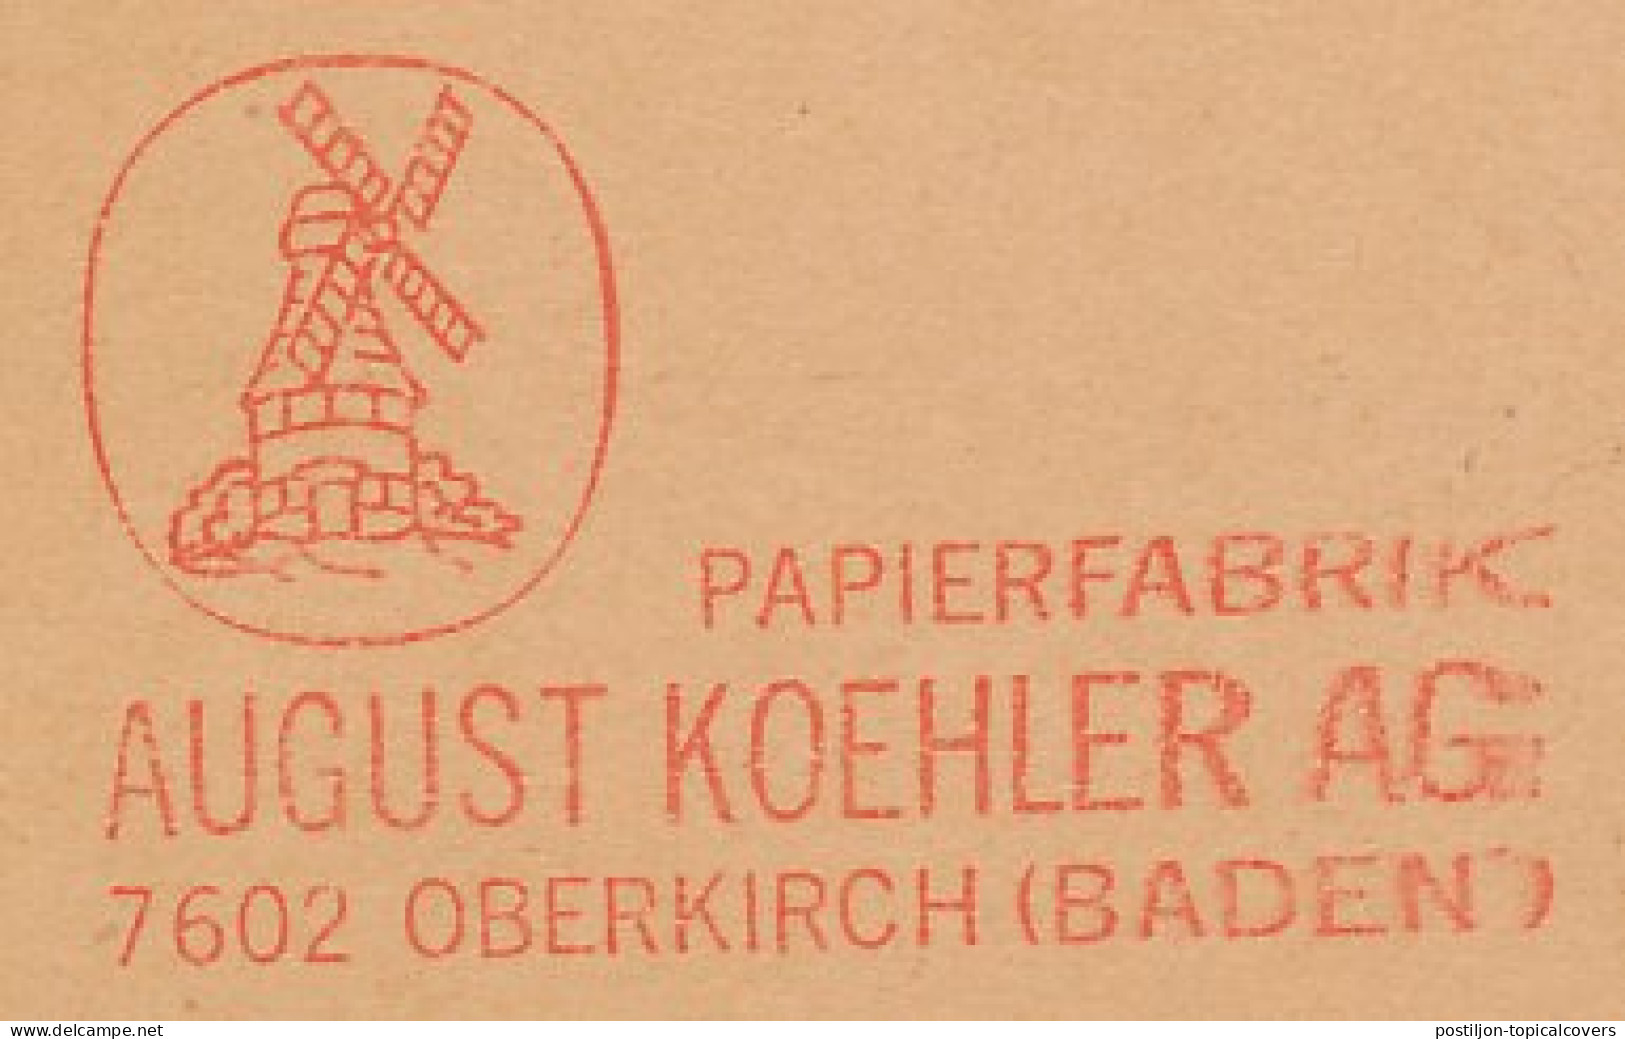 Meter Cut Germany 1963 Windmill - Paper Factory - Mühlen